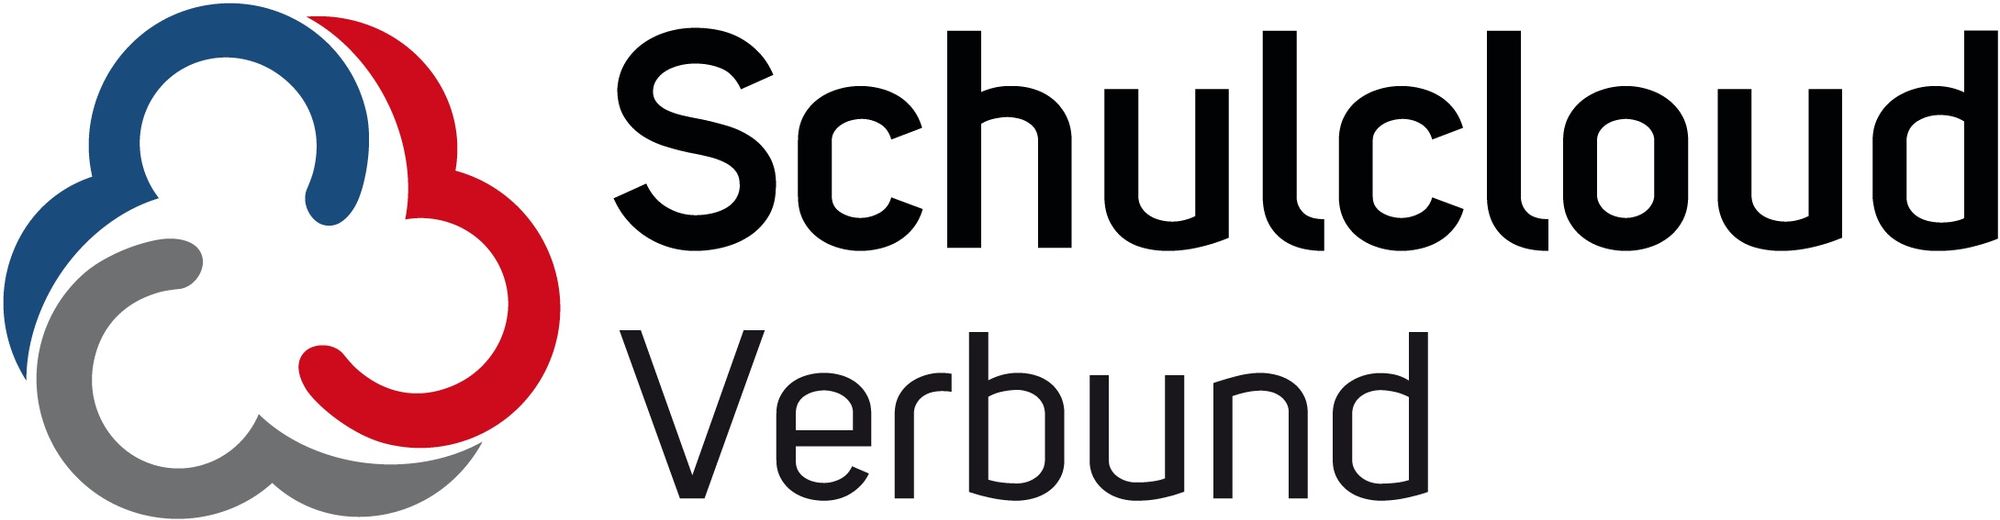 Schulcloud-Verbund